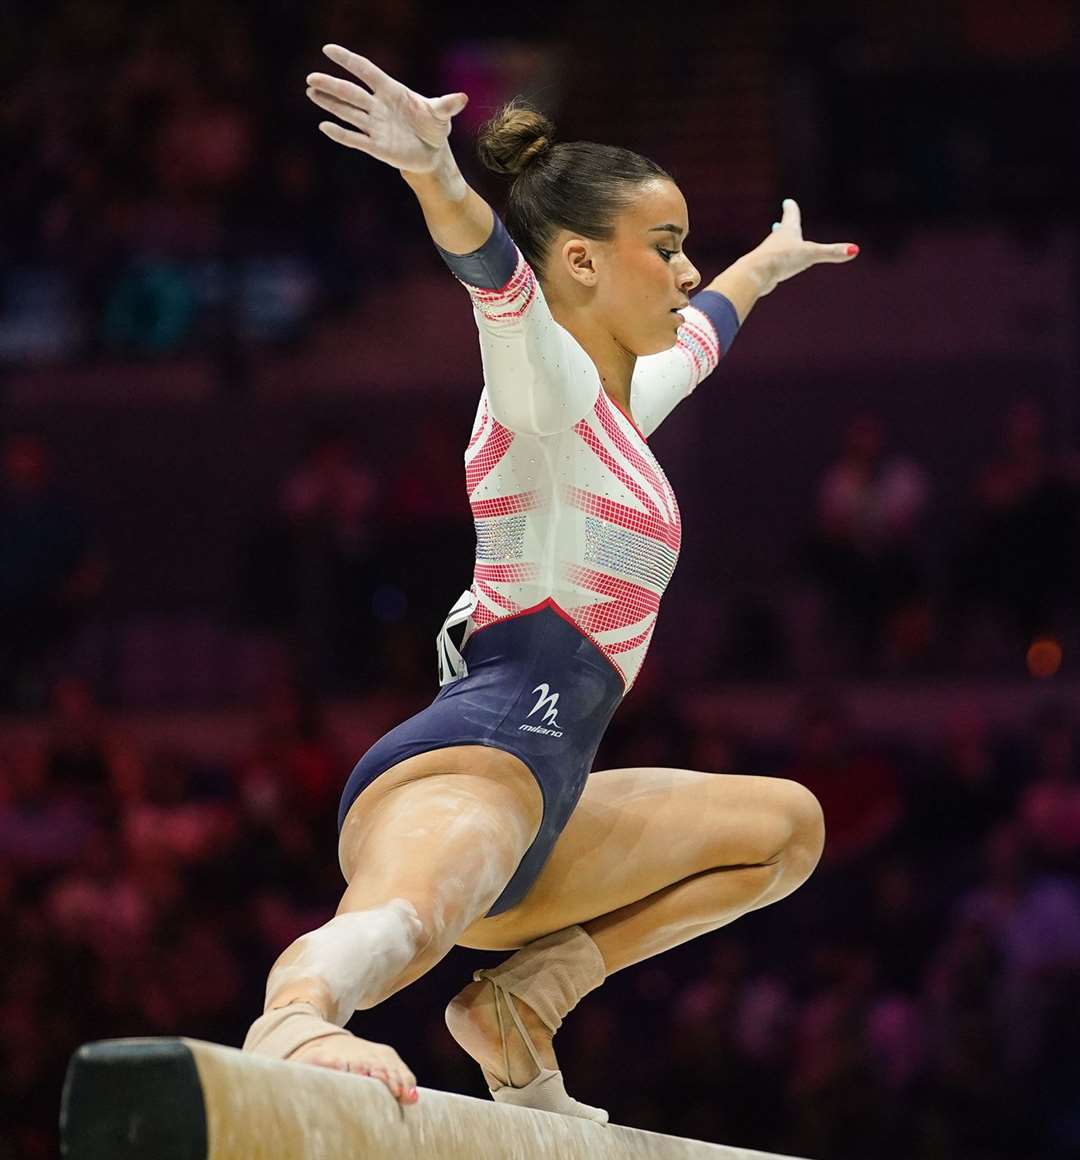 Georgia-Mae Fenton represented Great Britain at the World Gymnastics Championships last month, winning team silver. Picture: British Gymnastics